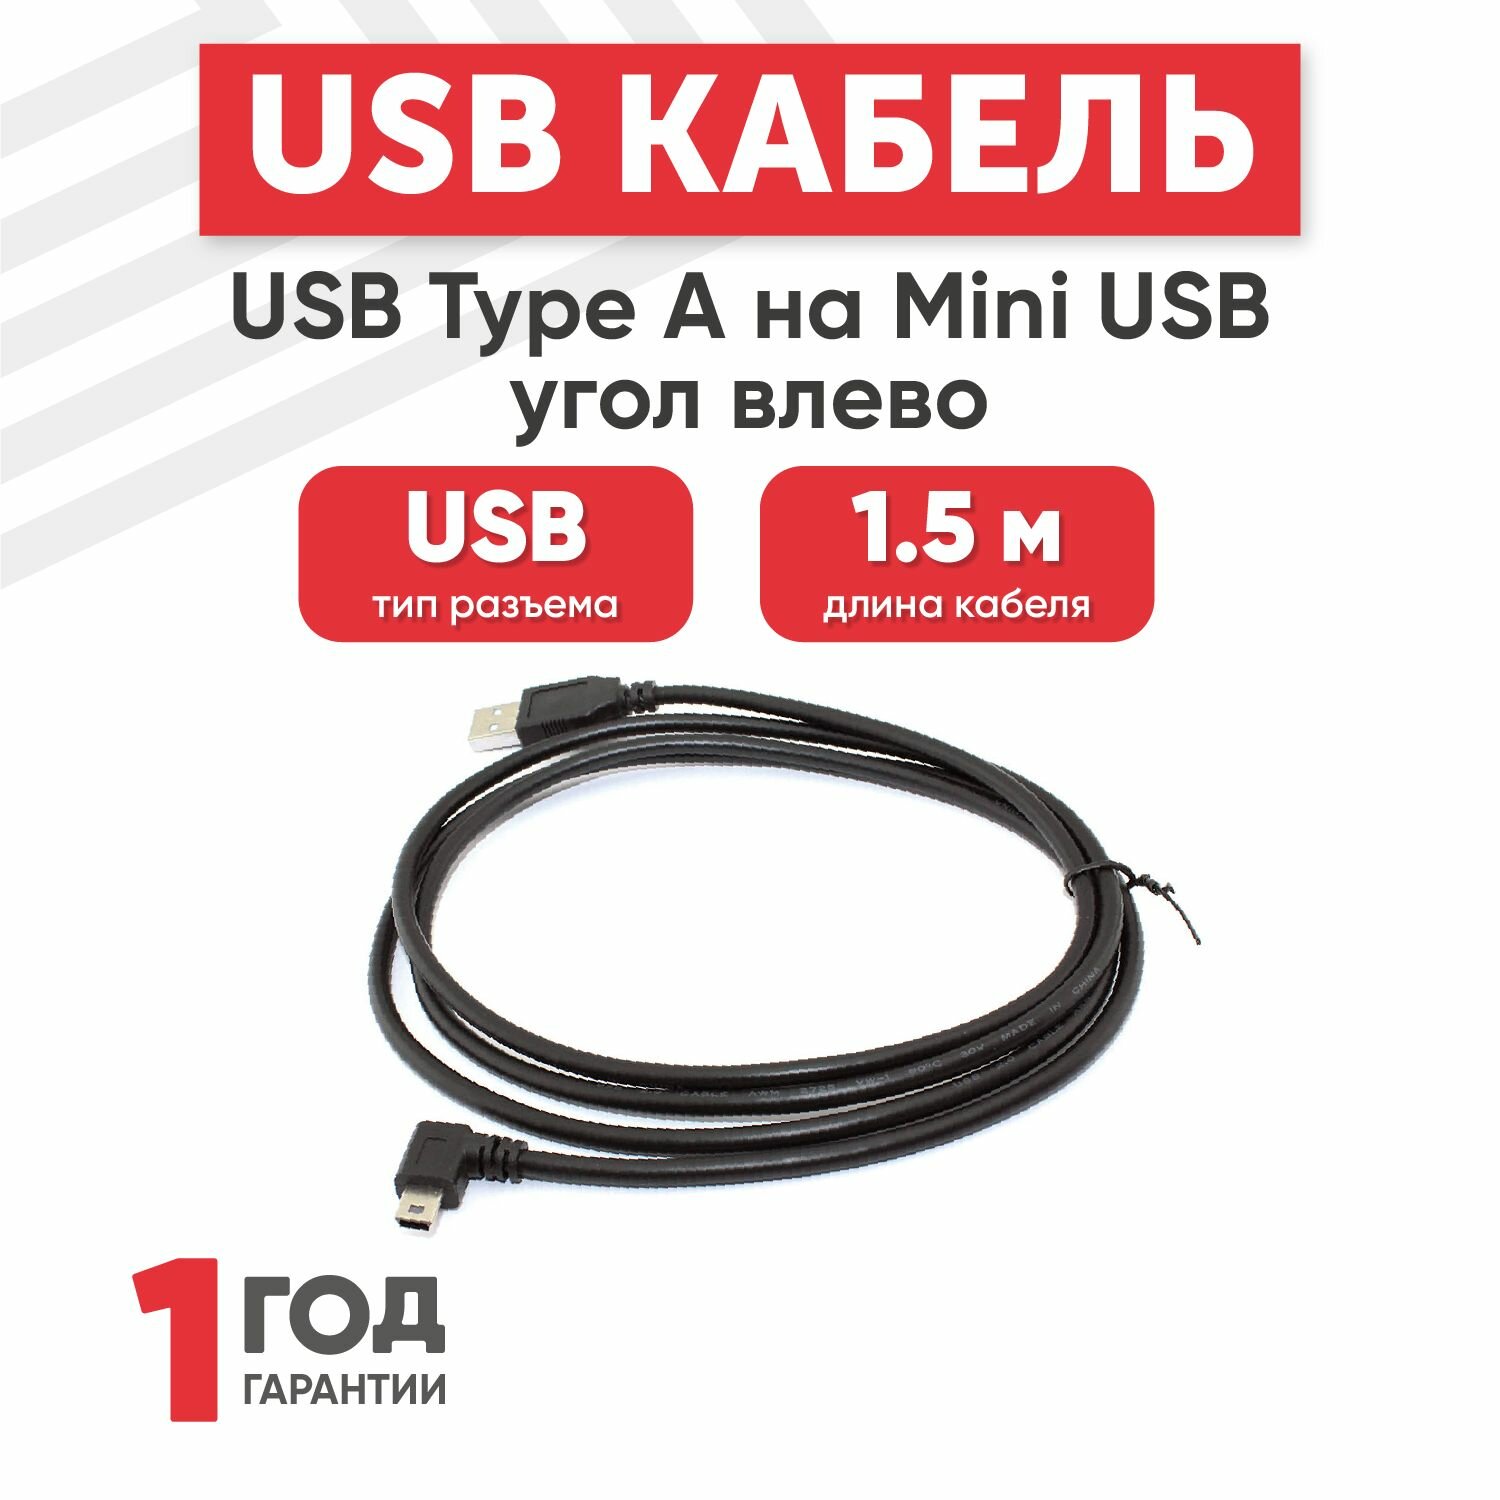 Кабель USB Type-A на MiniUSB угол влево, длина 1.5 метра